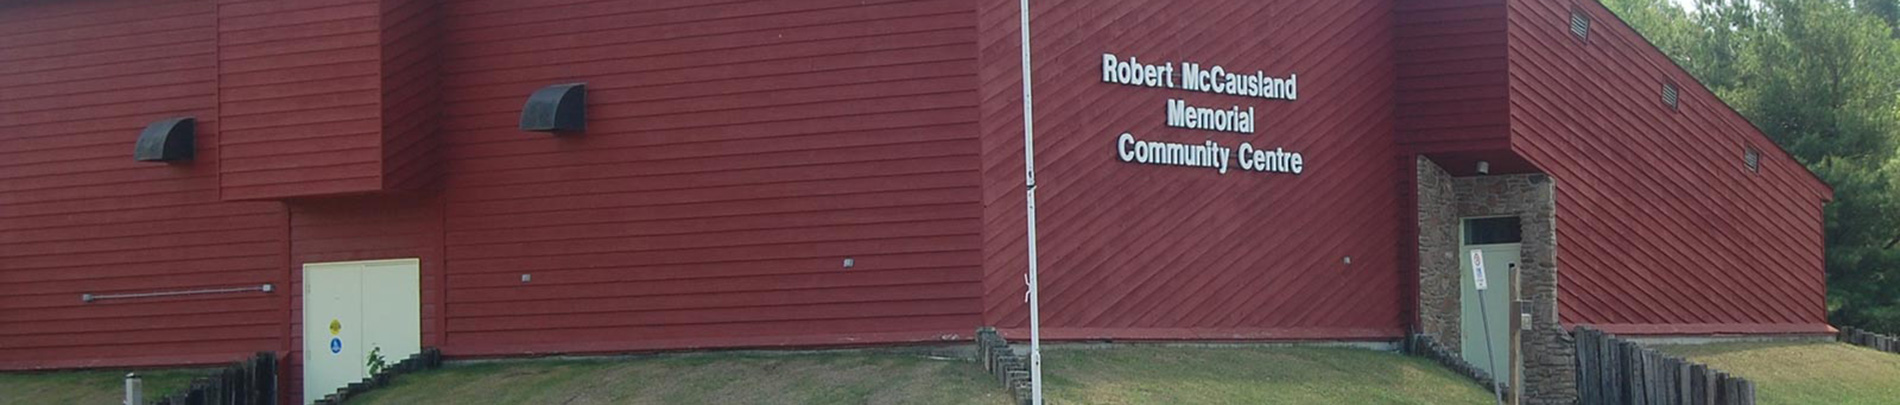 Exterior photo of the Robert McCausland Memorial Community Centre in Gooderham